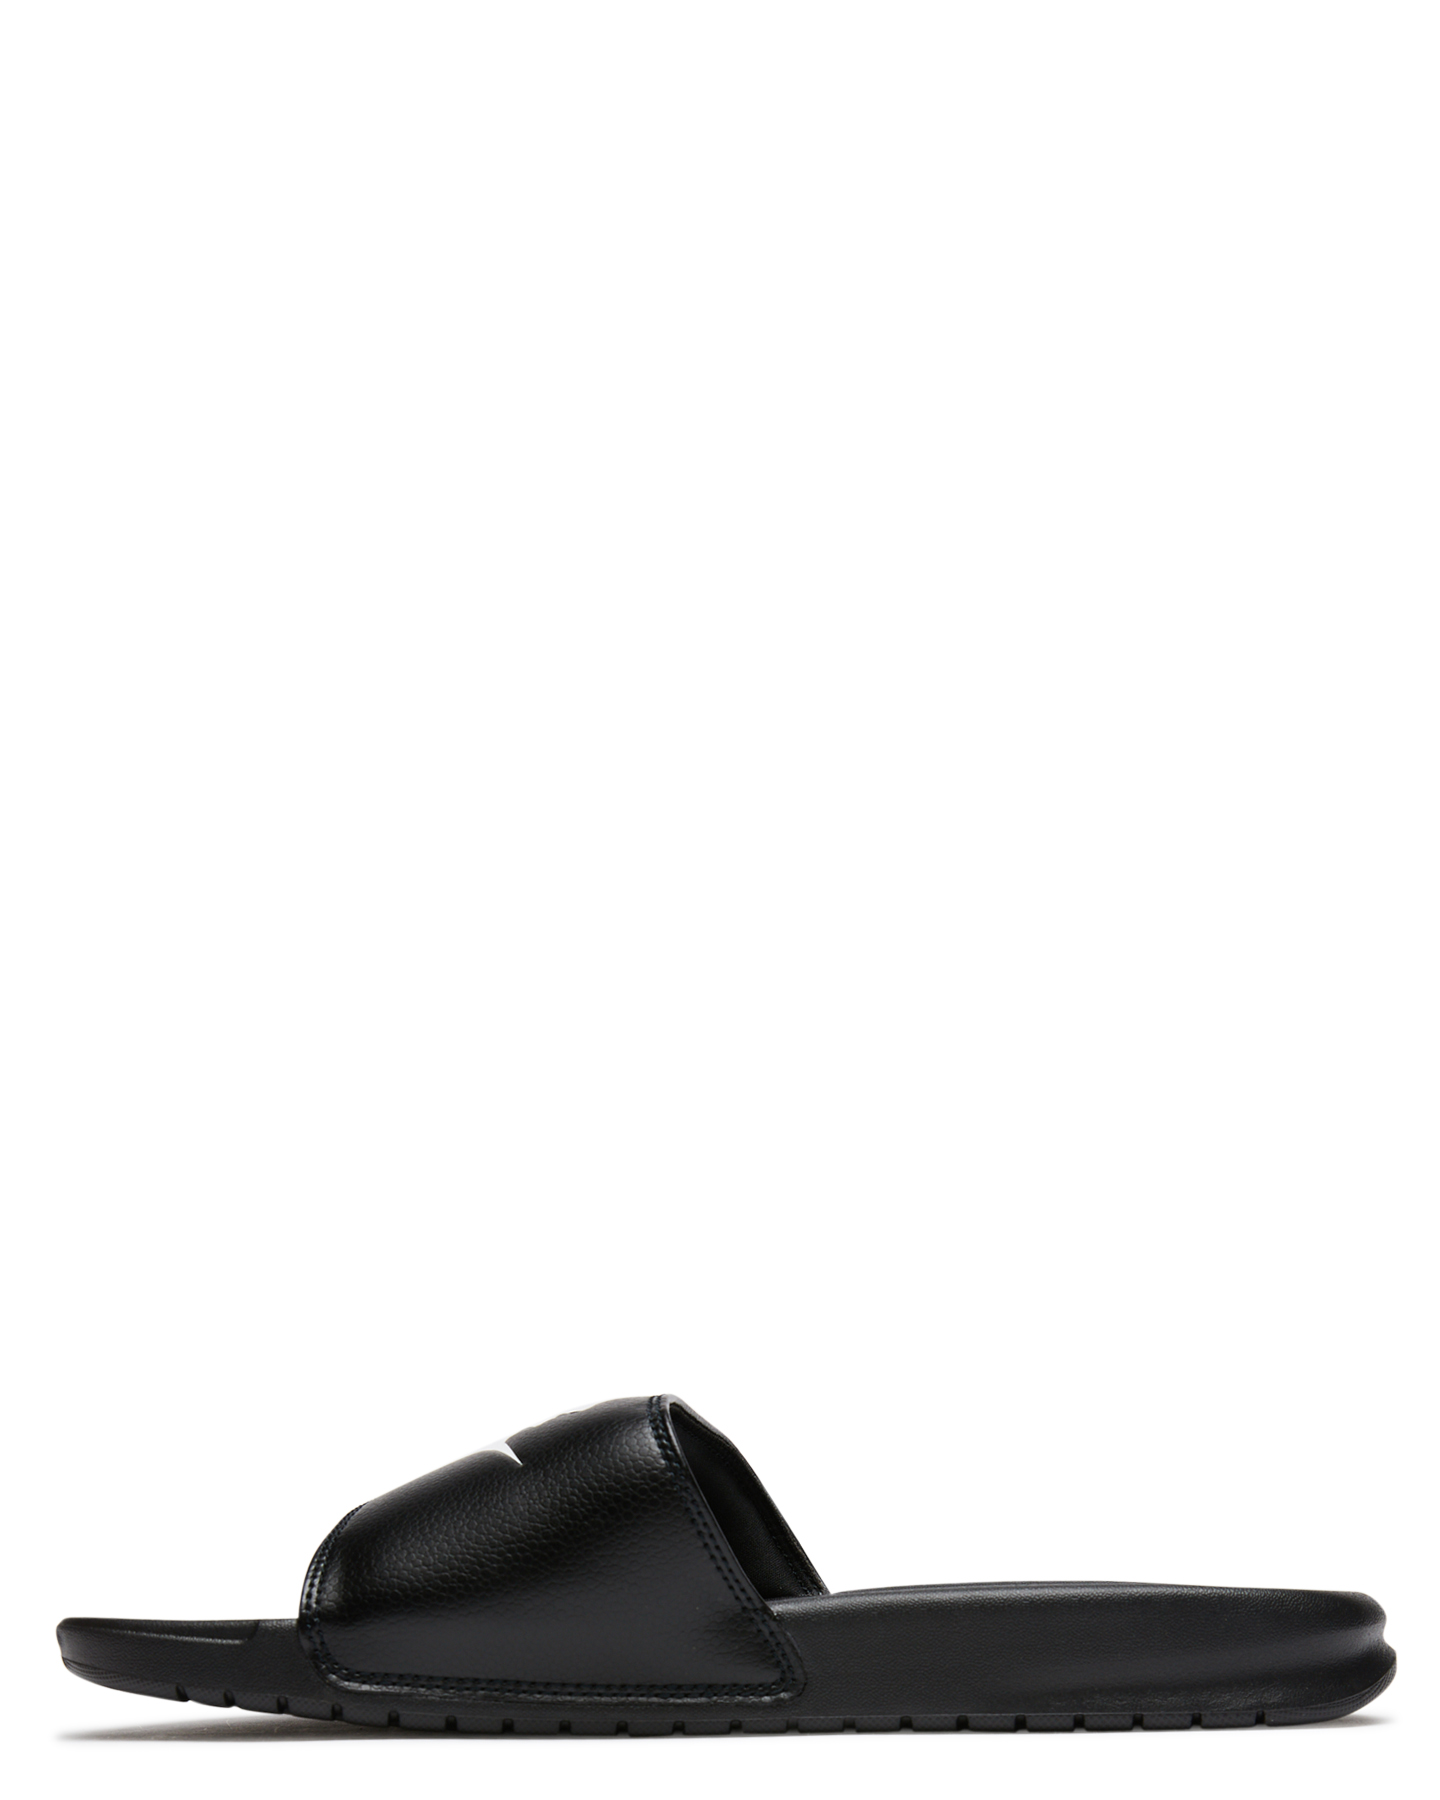 Nike Benassi Just Do It Slide - Black White | SurfStitch